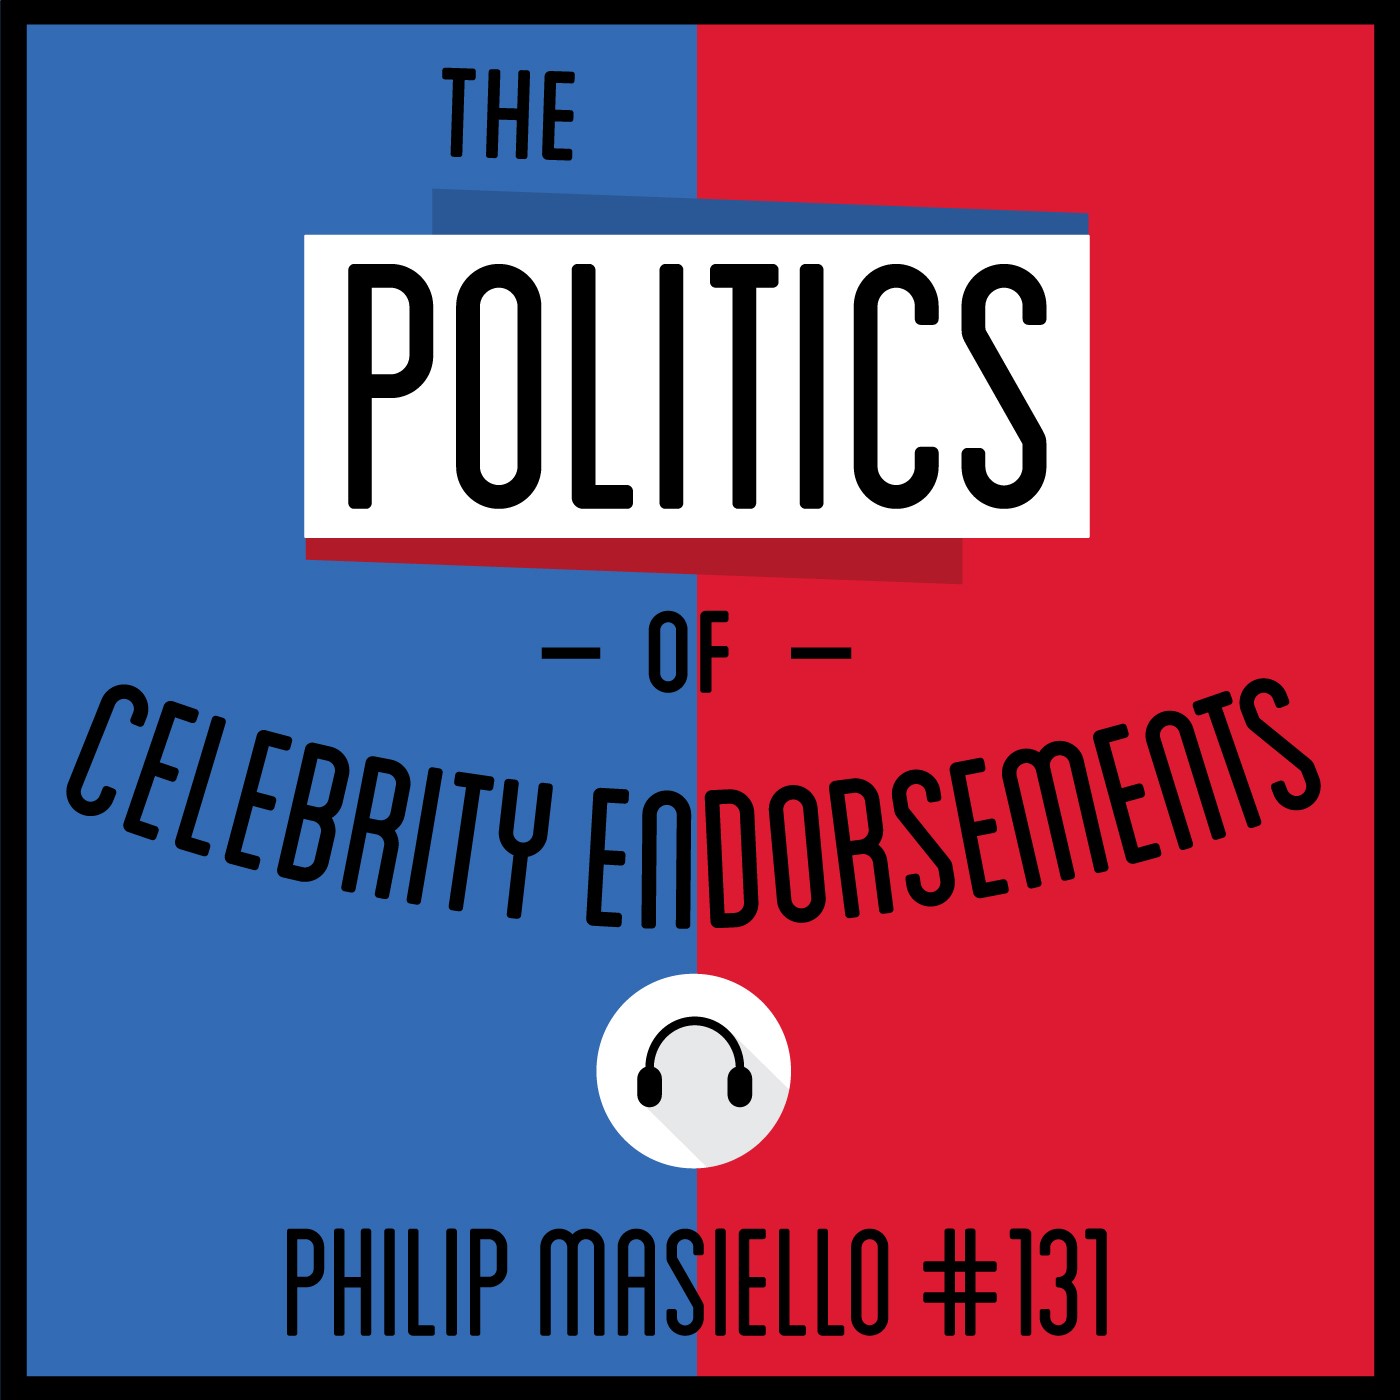 131: The Politics of Celebrity Endorsements - Philip Masiello